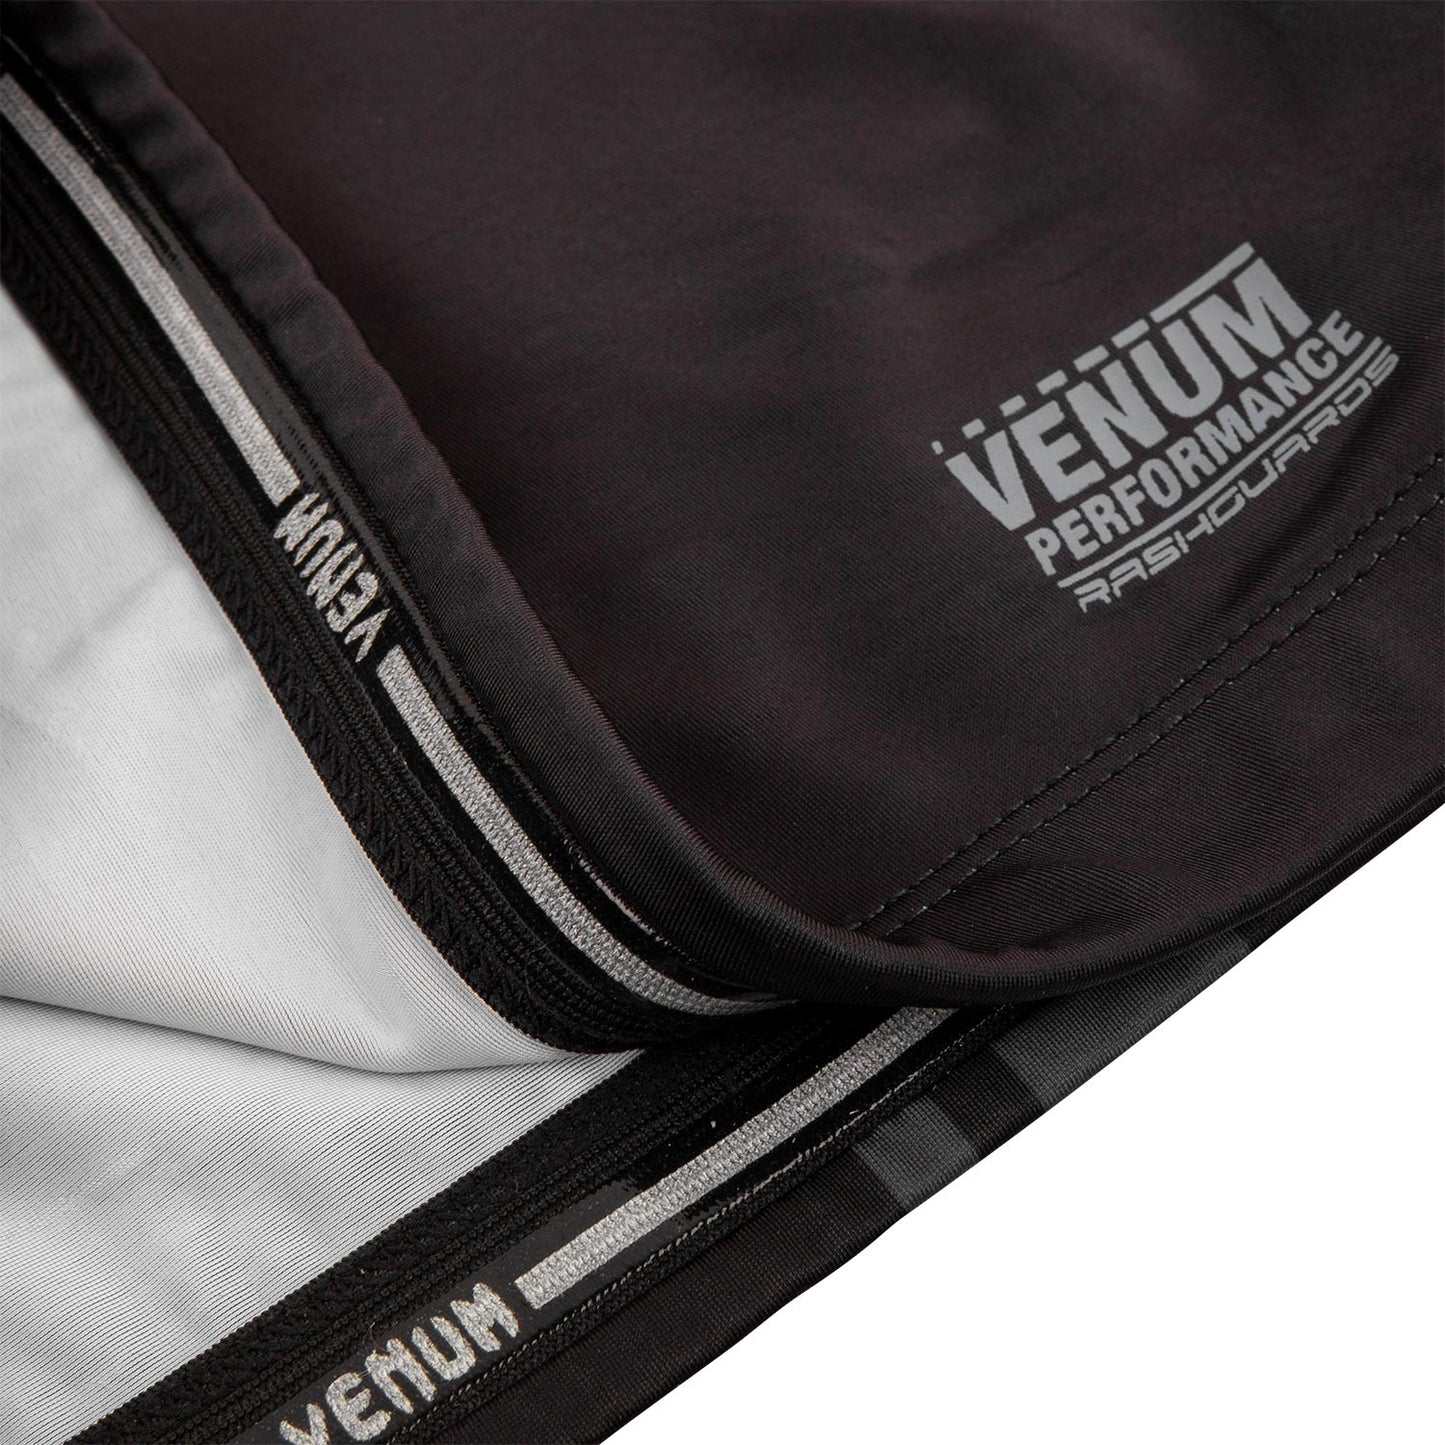 Venum Logos Rashguard - Short Sleeves - Black/Black